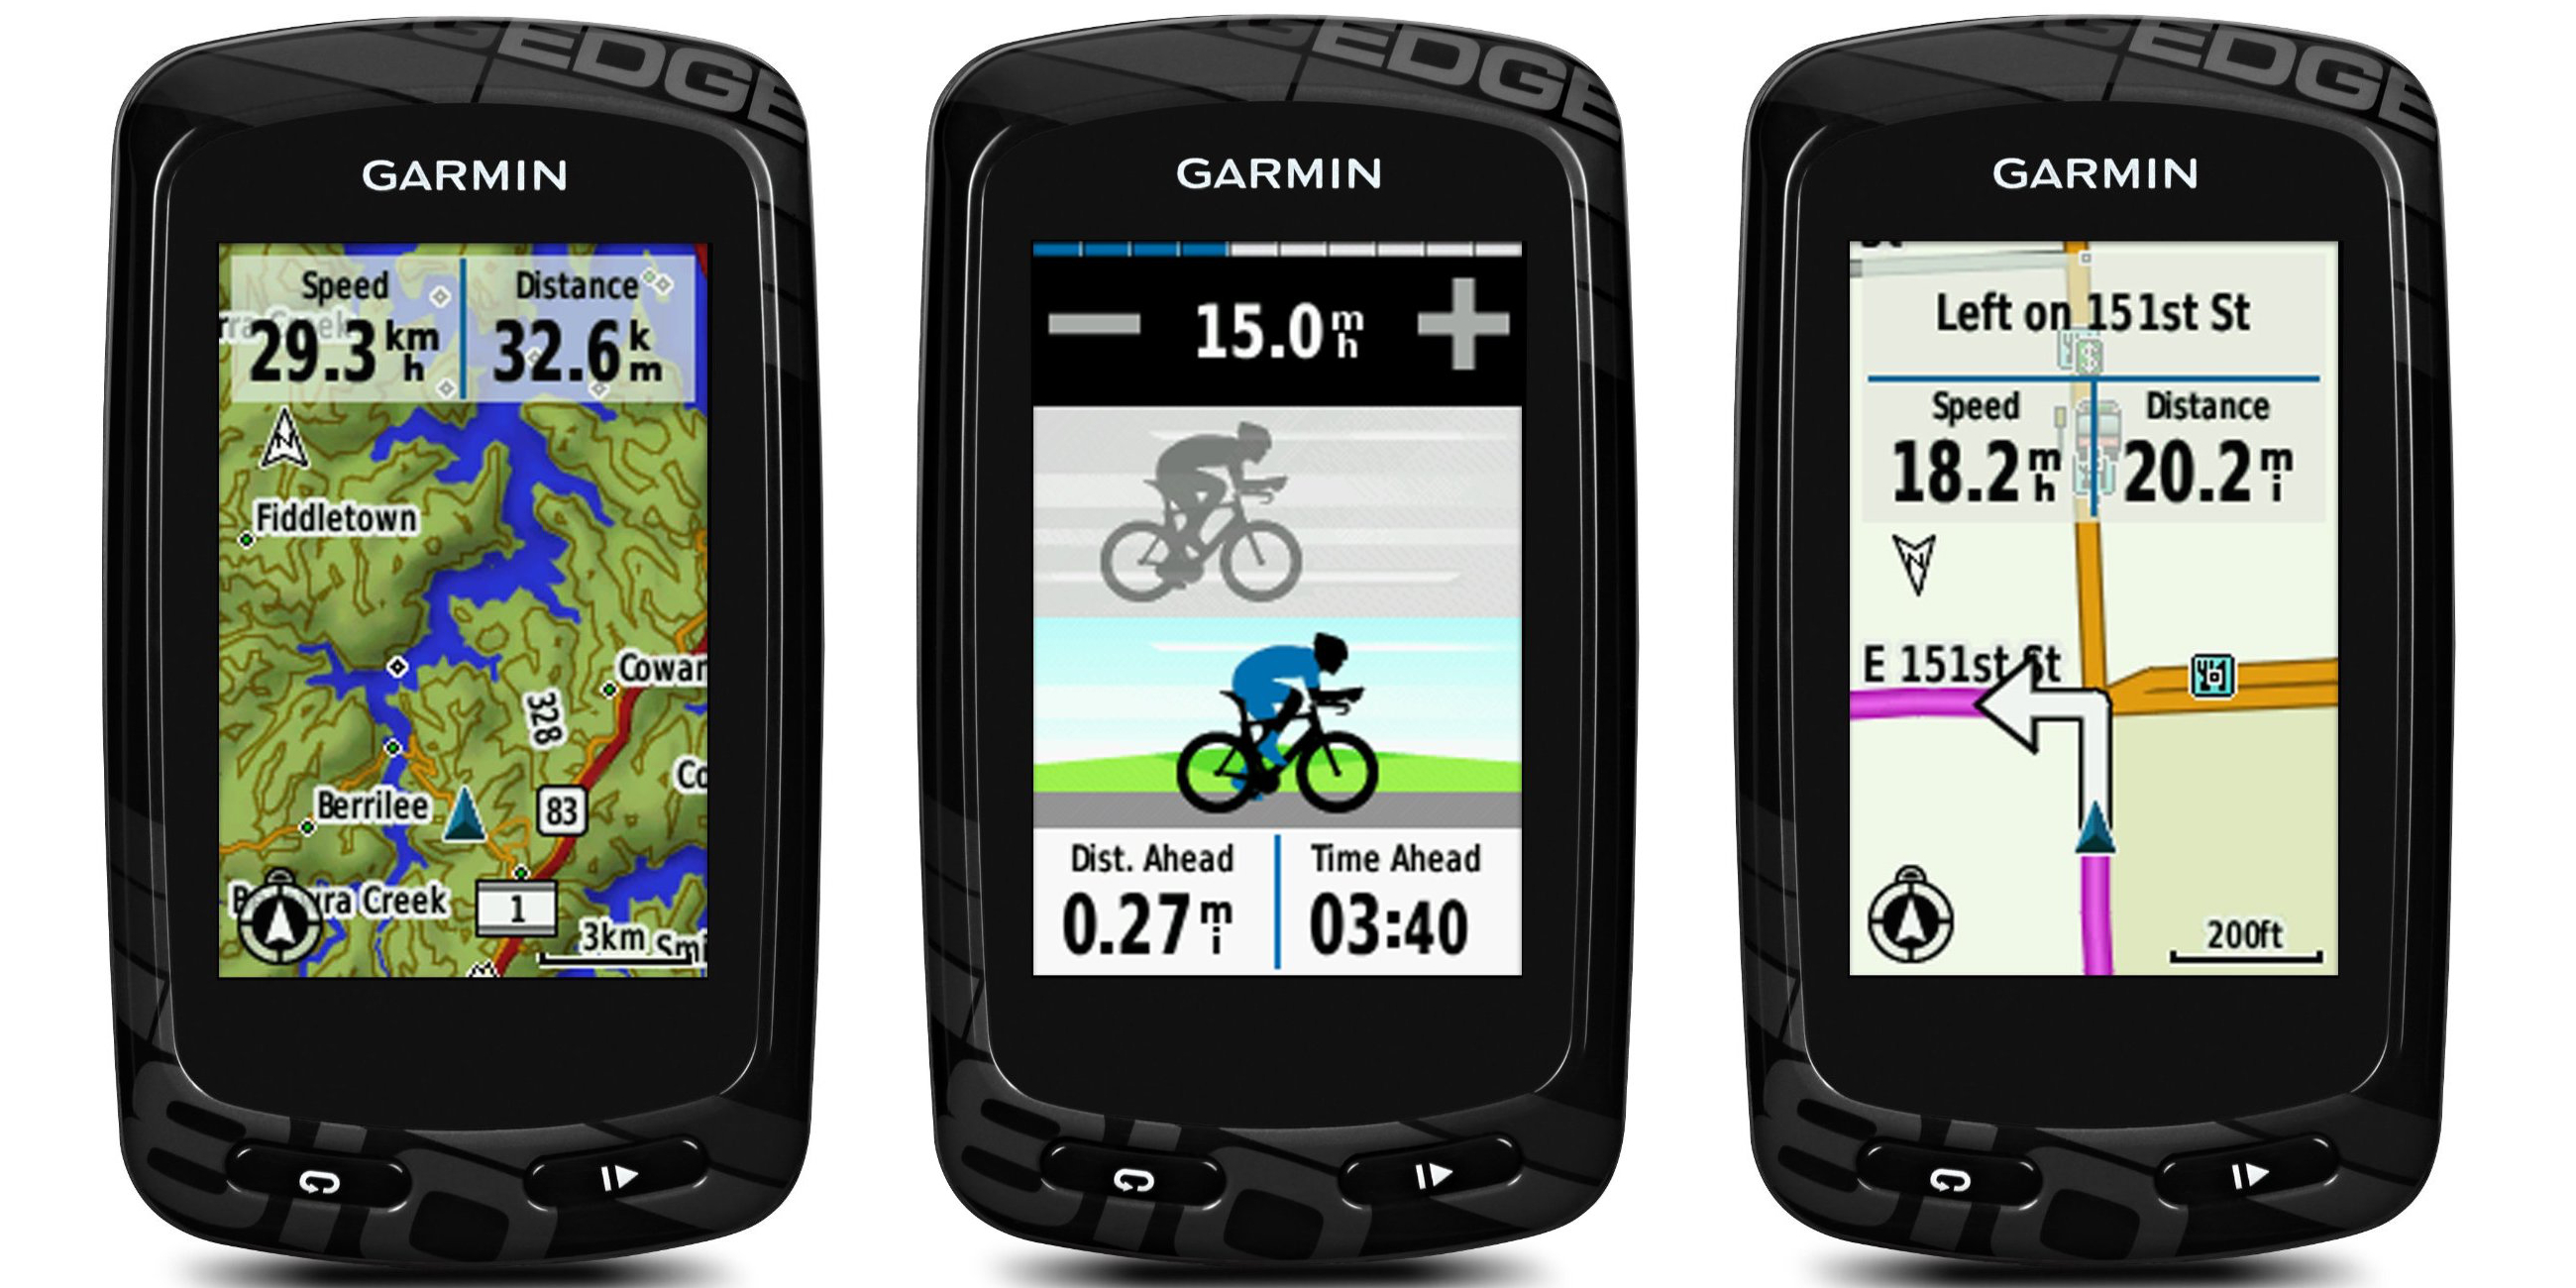 afstand Alexander Graham Bell tyfoon Sports/Fitness: Garmin 810 GPS Bike Computer $300 (Orig. $500), MyProtein  48% off - 5.5lbs. Whey $28, more